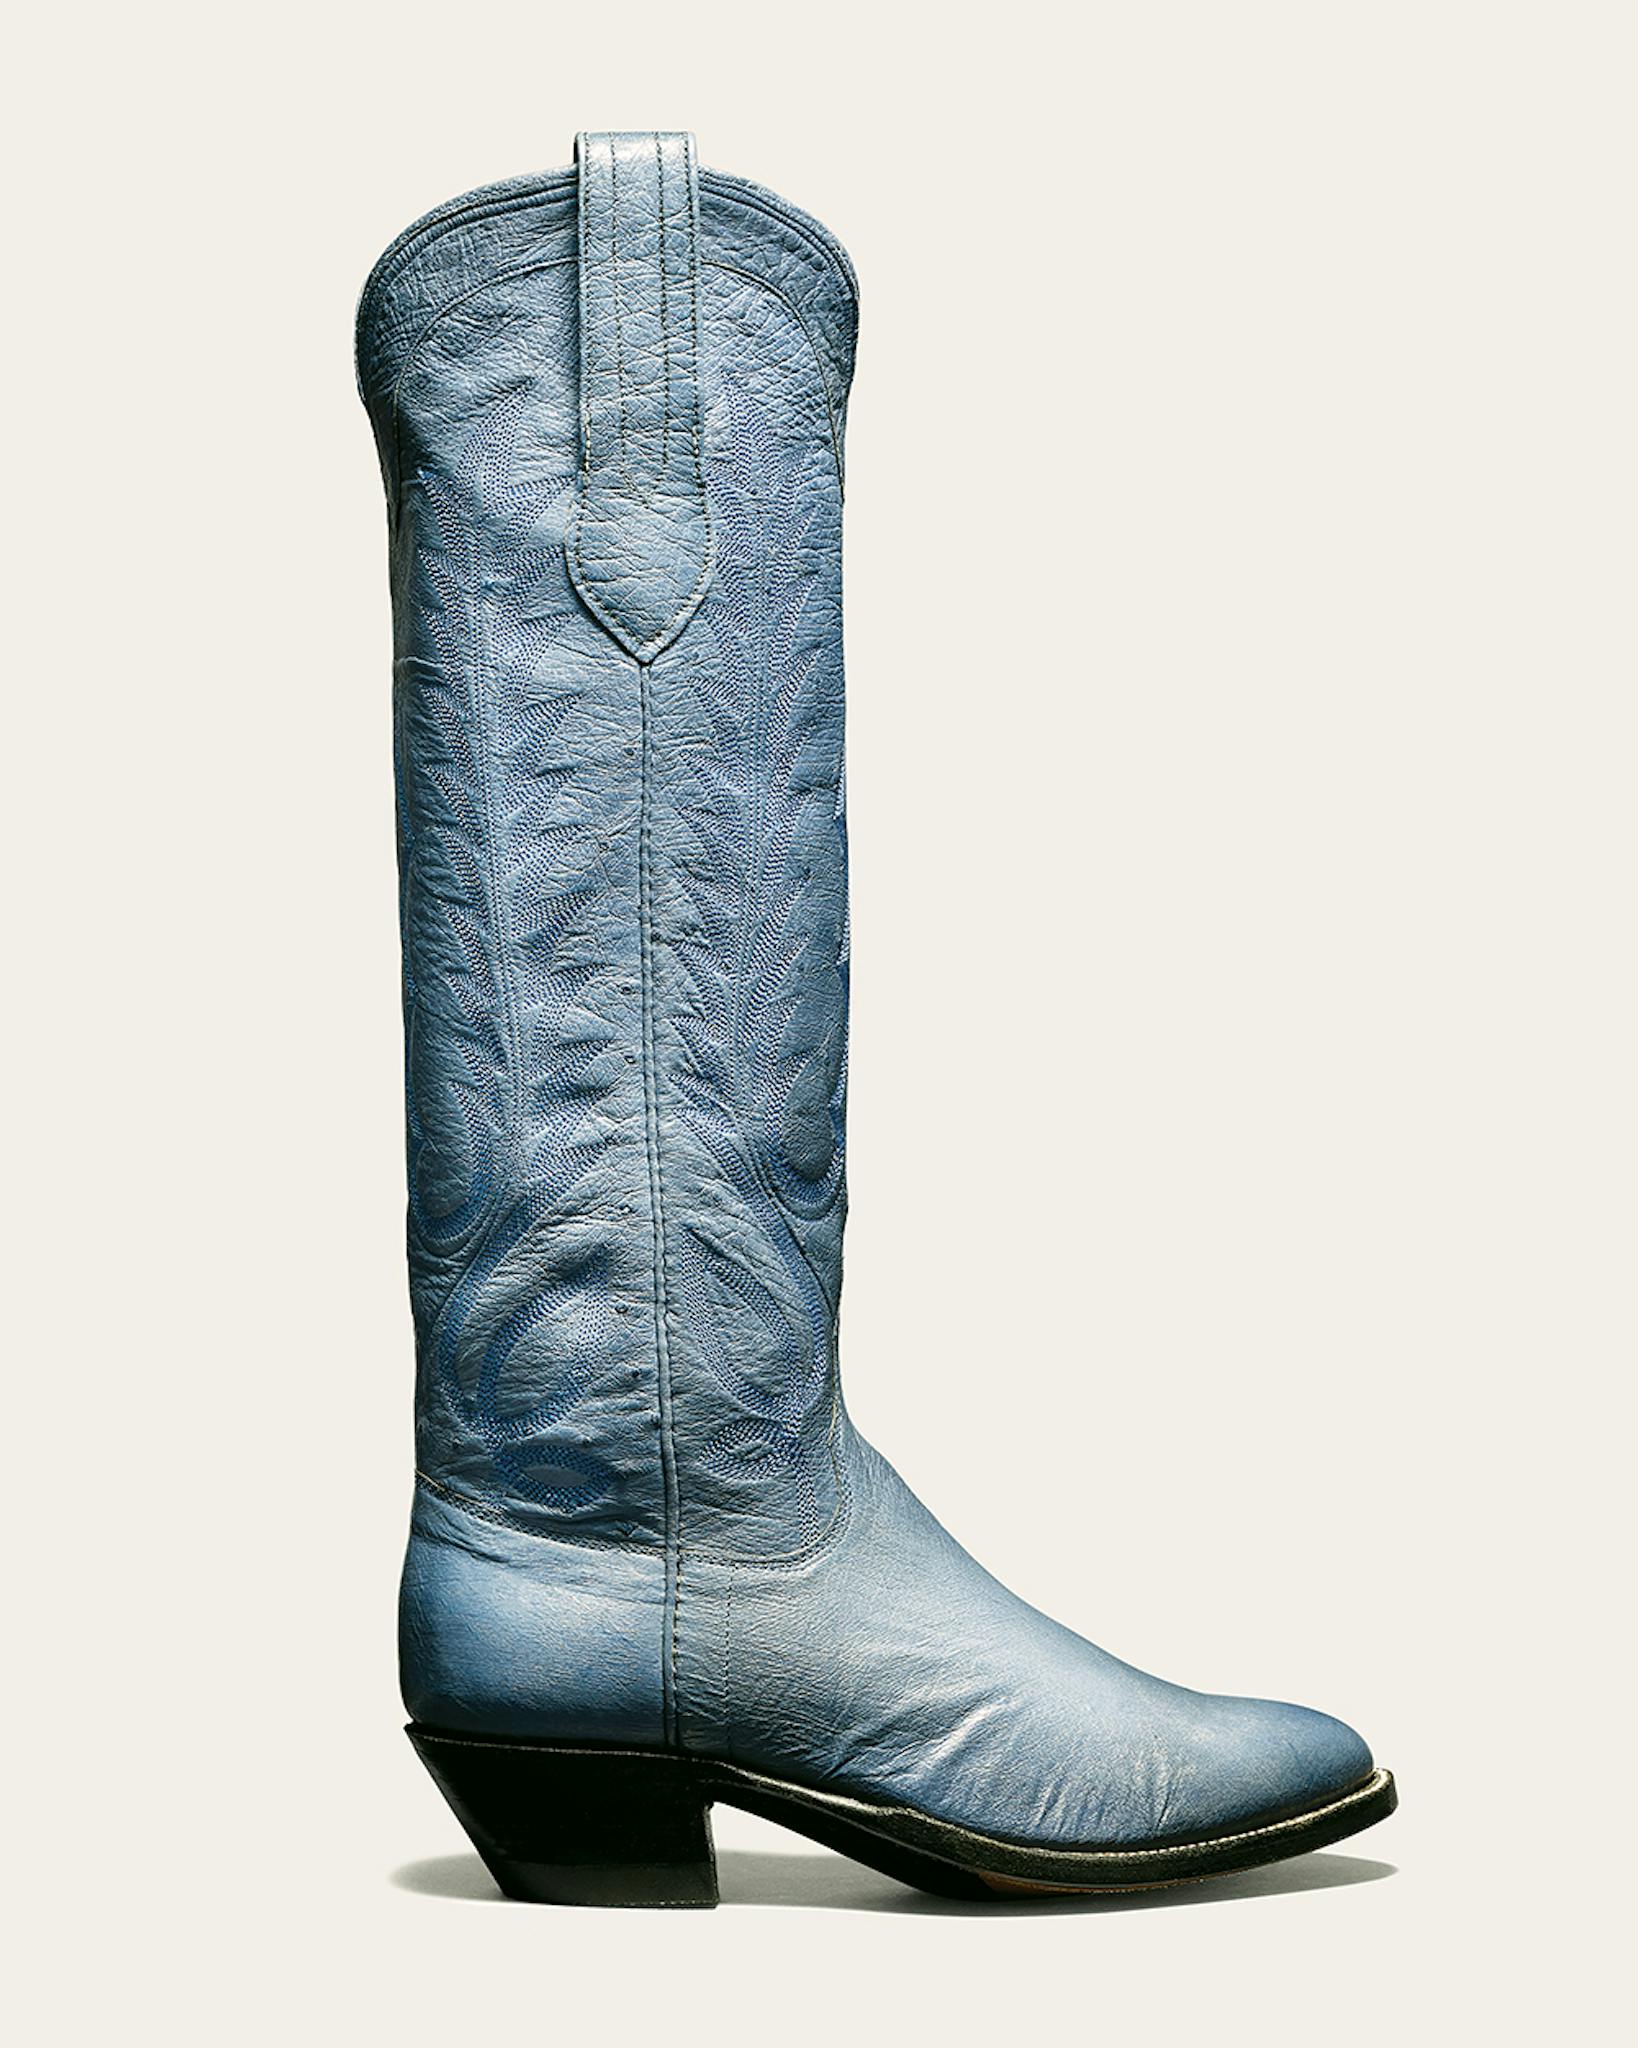 M.L. Leddy's tall, baby blue boot.